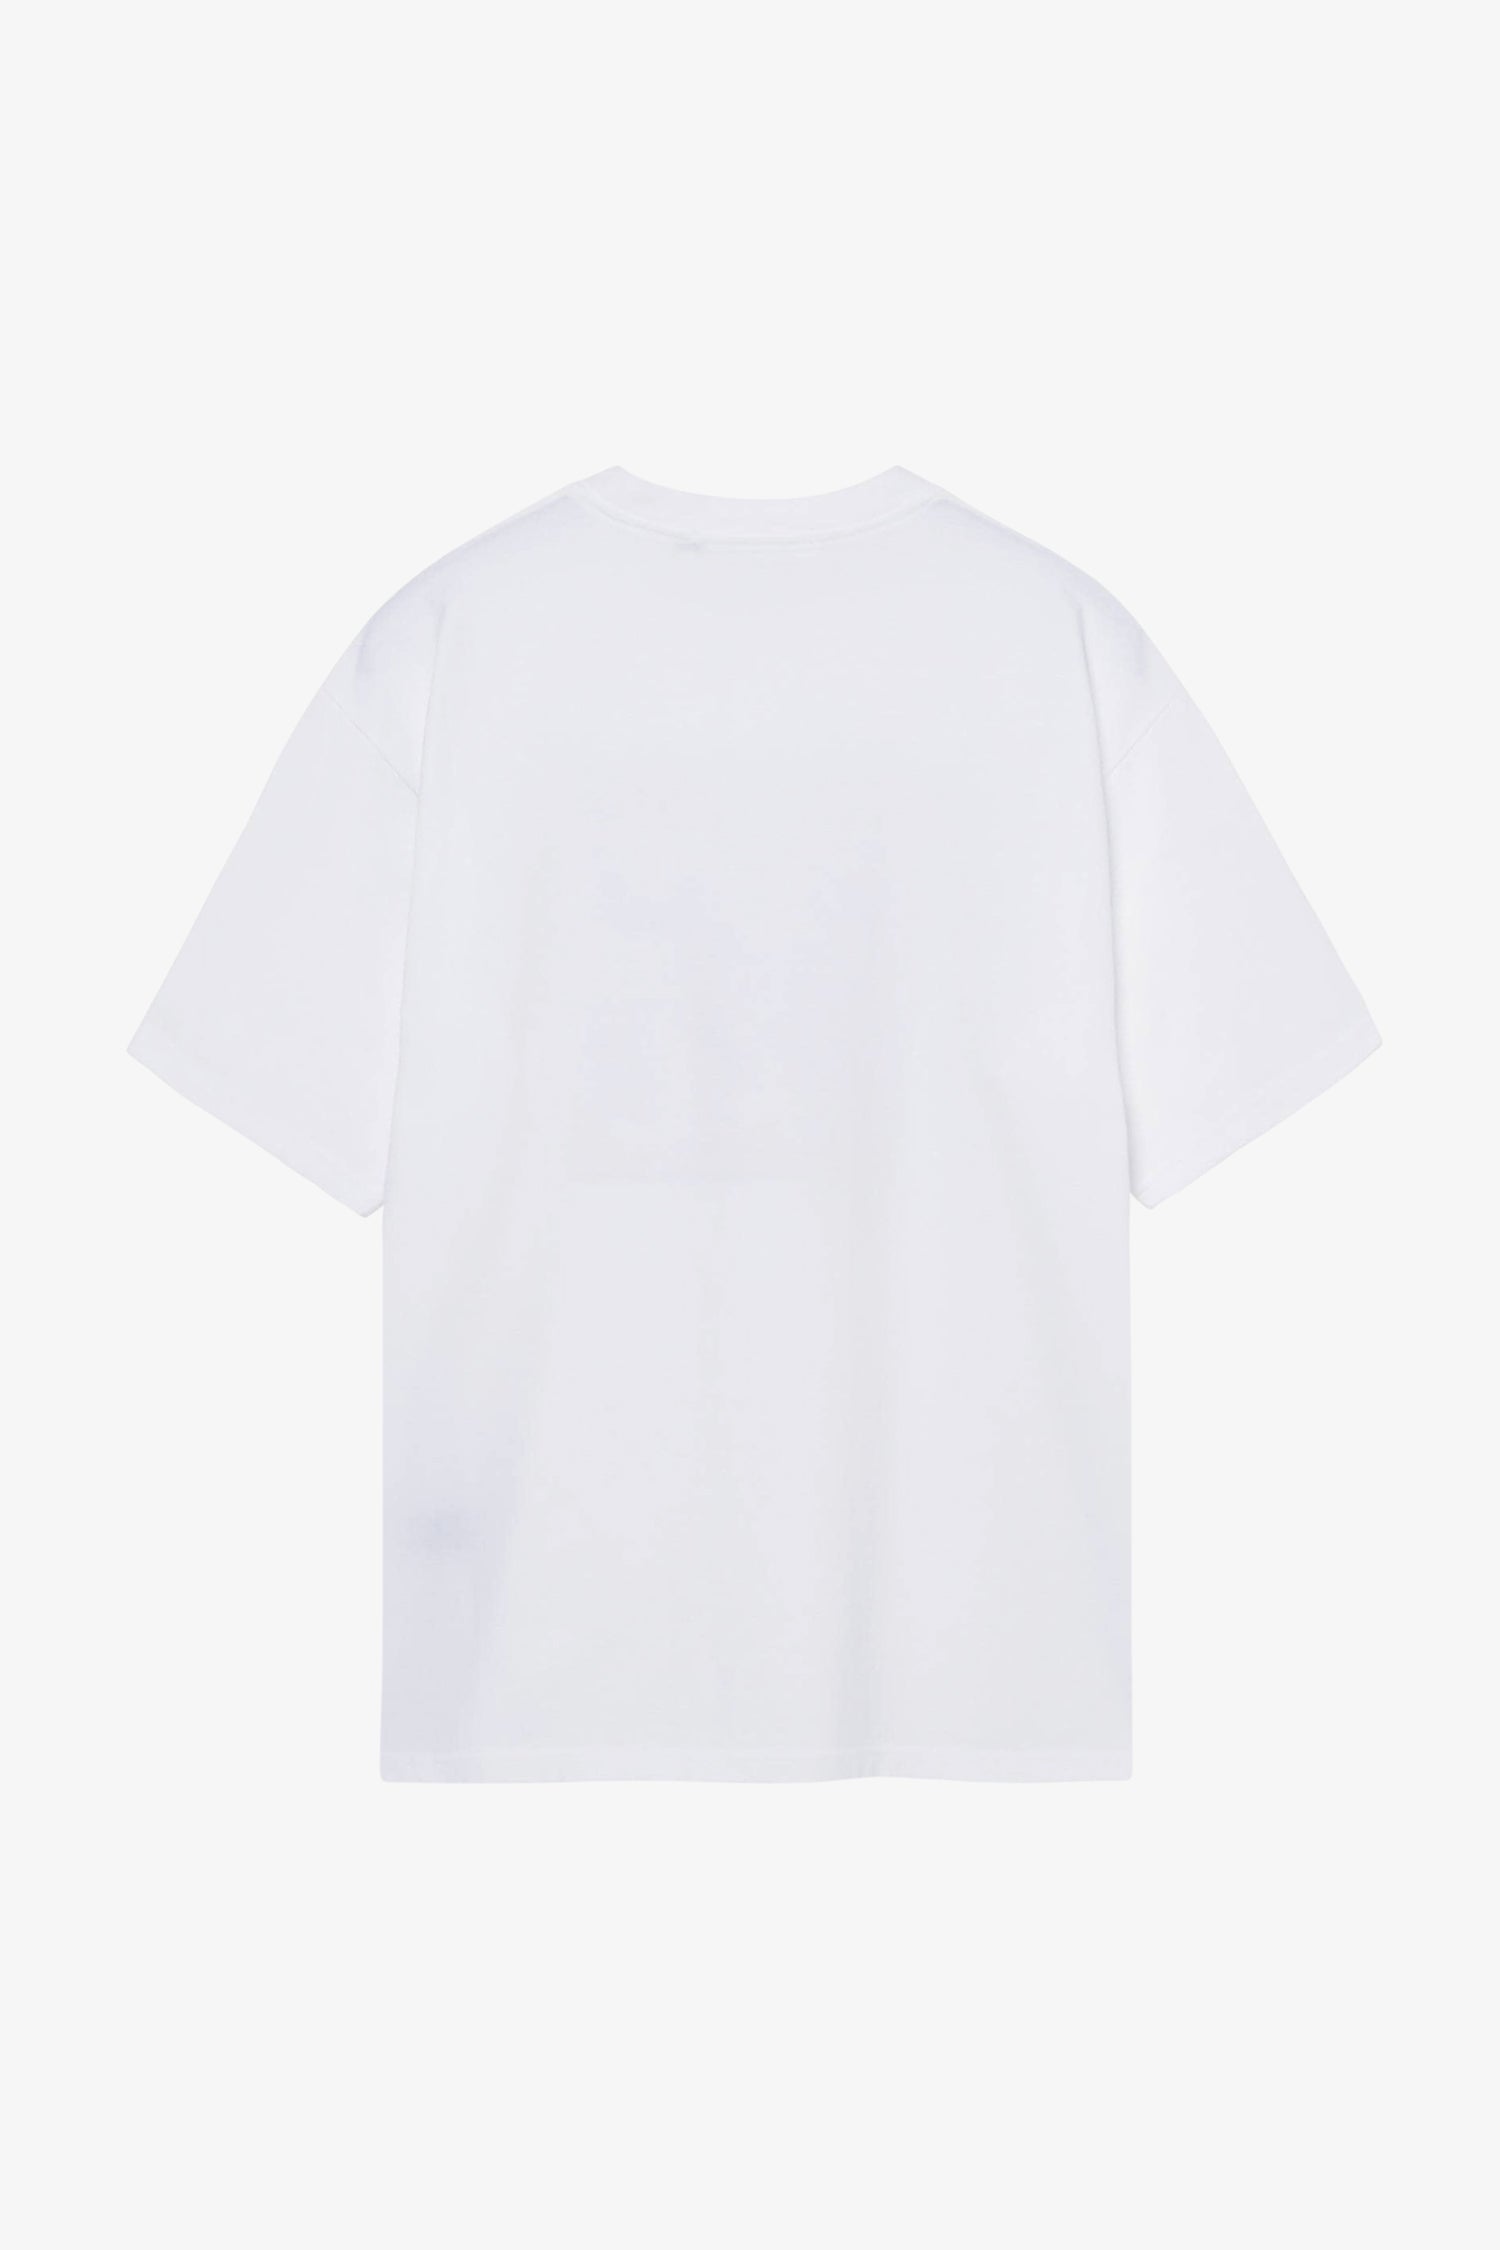 Selectshop FRAME - UNDERCOVER Wisdom T-Shirt T-Shirt Dubai